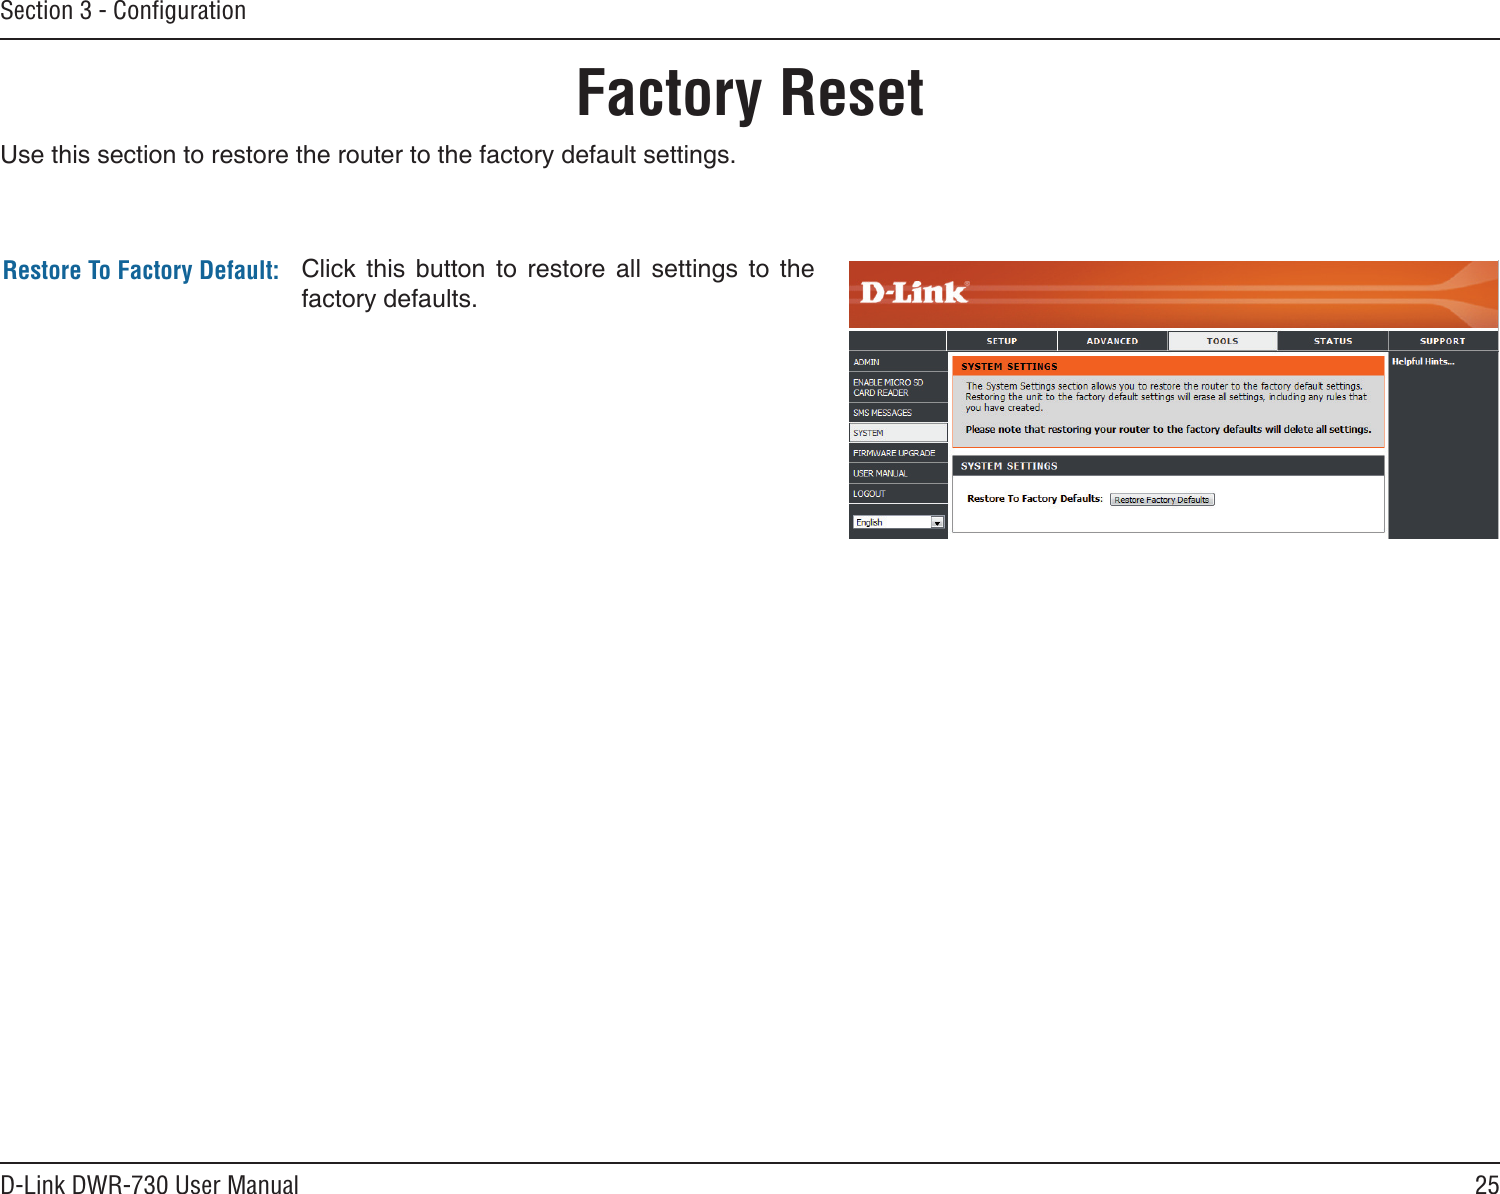 25D-Link DWR-730 User ManualSection 3 - ConﬁgurationFactory Reset        Restore To Factory Default: